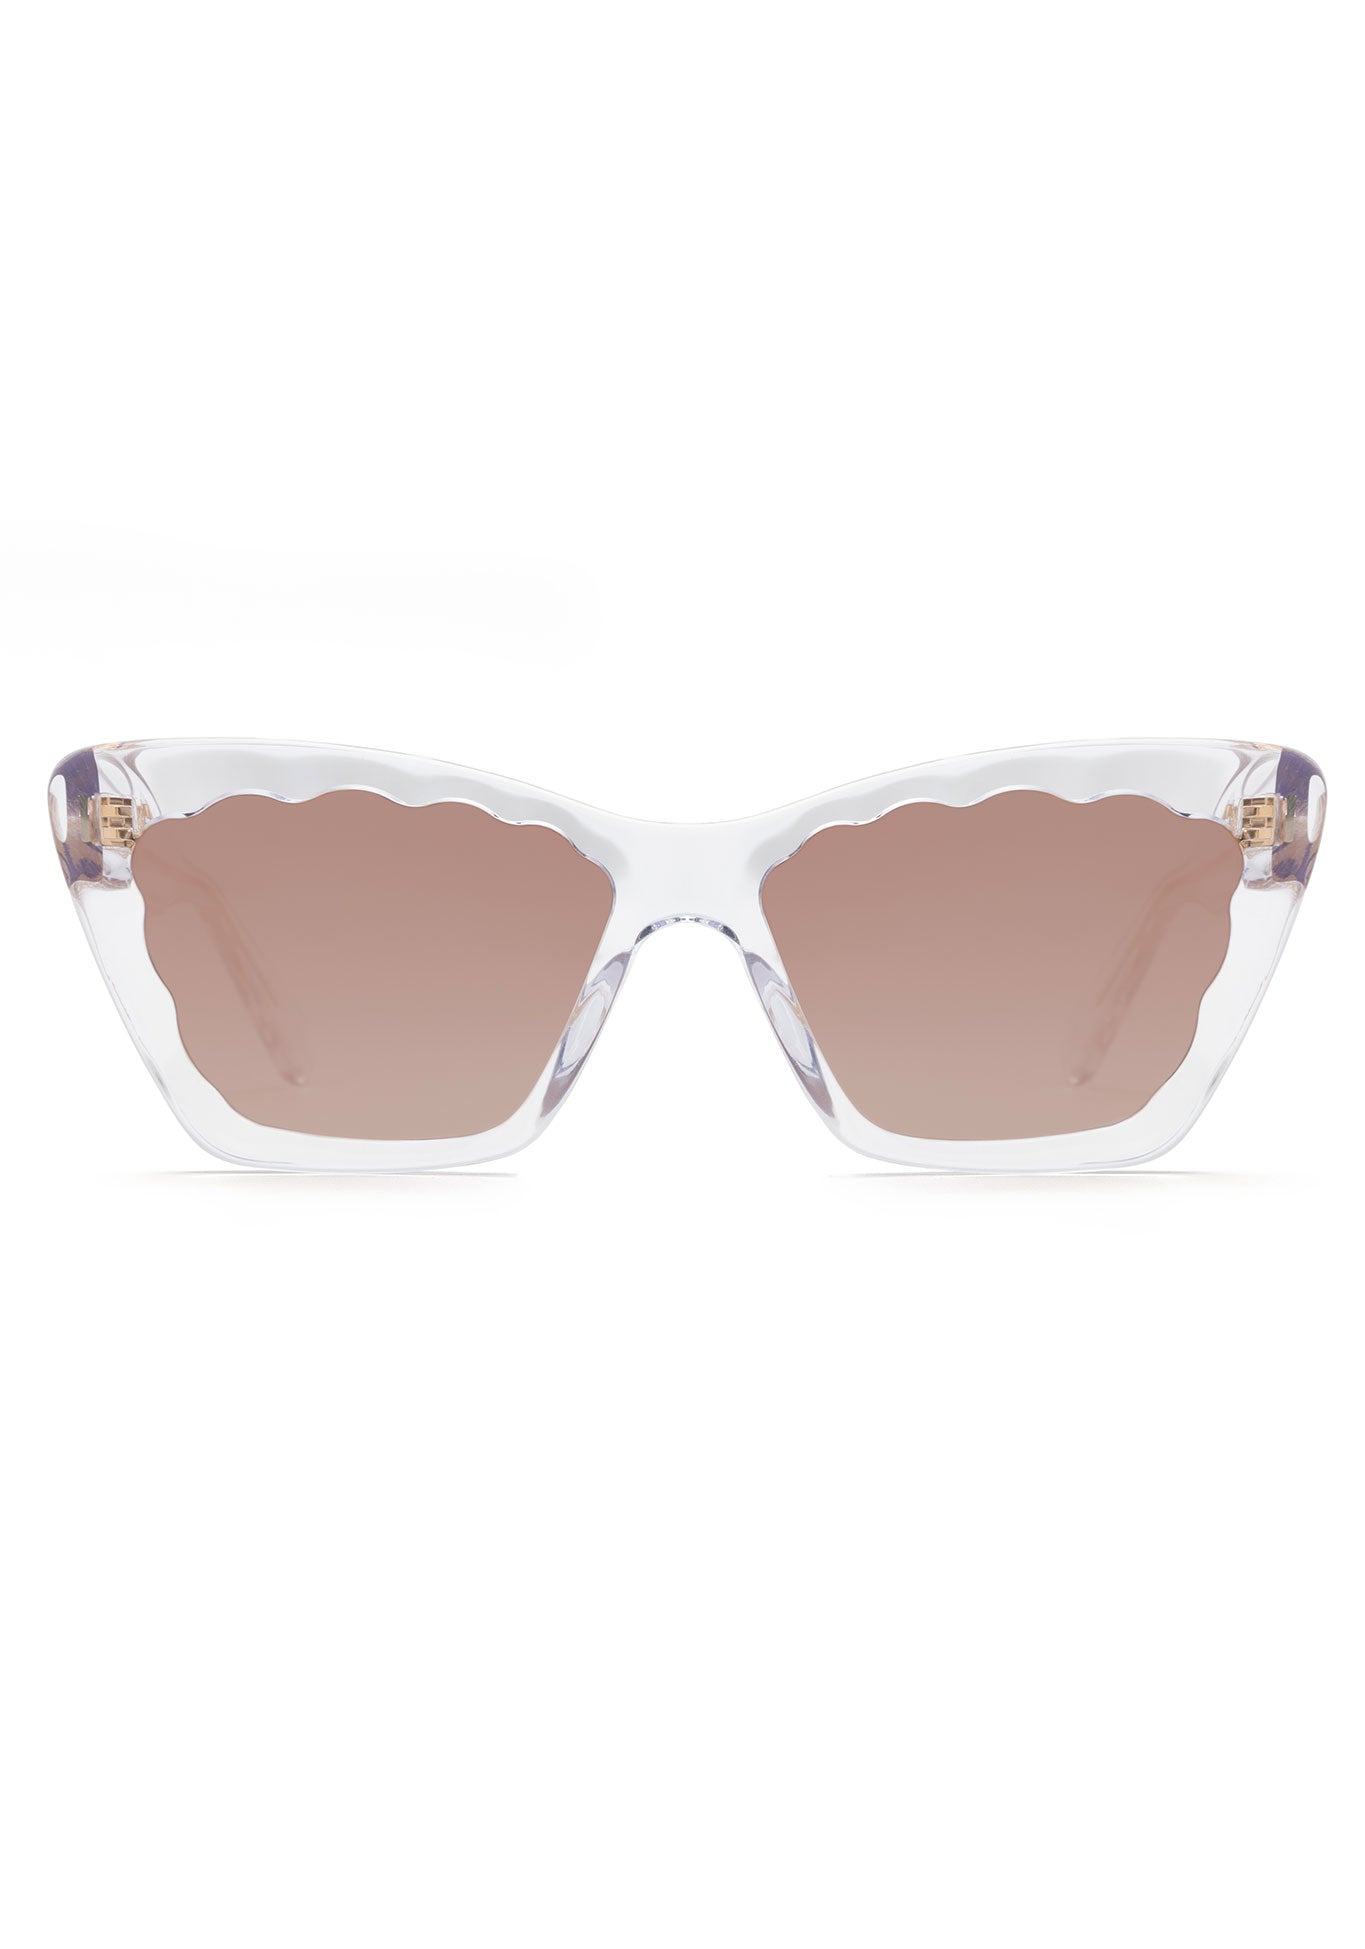 KREWE - BRIGITTE | Crystal Mirrored Handcfrafed, clear acetate scalloped cat eye sunglasses